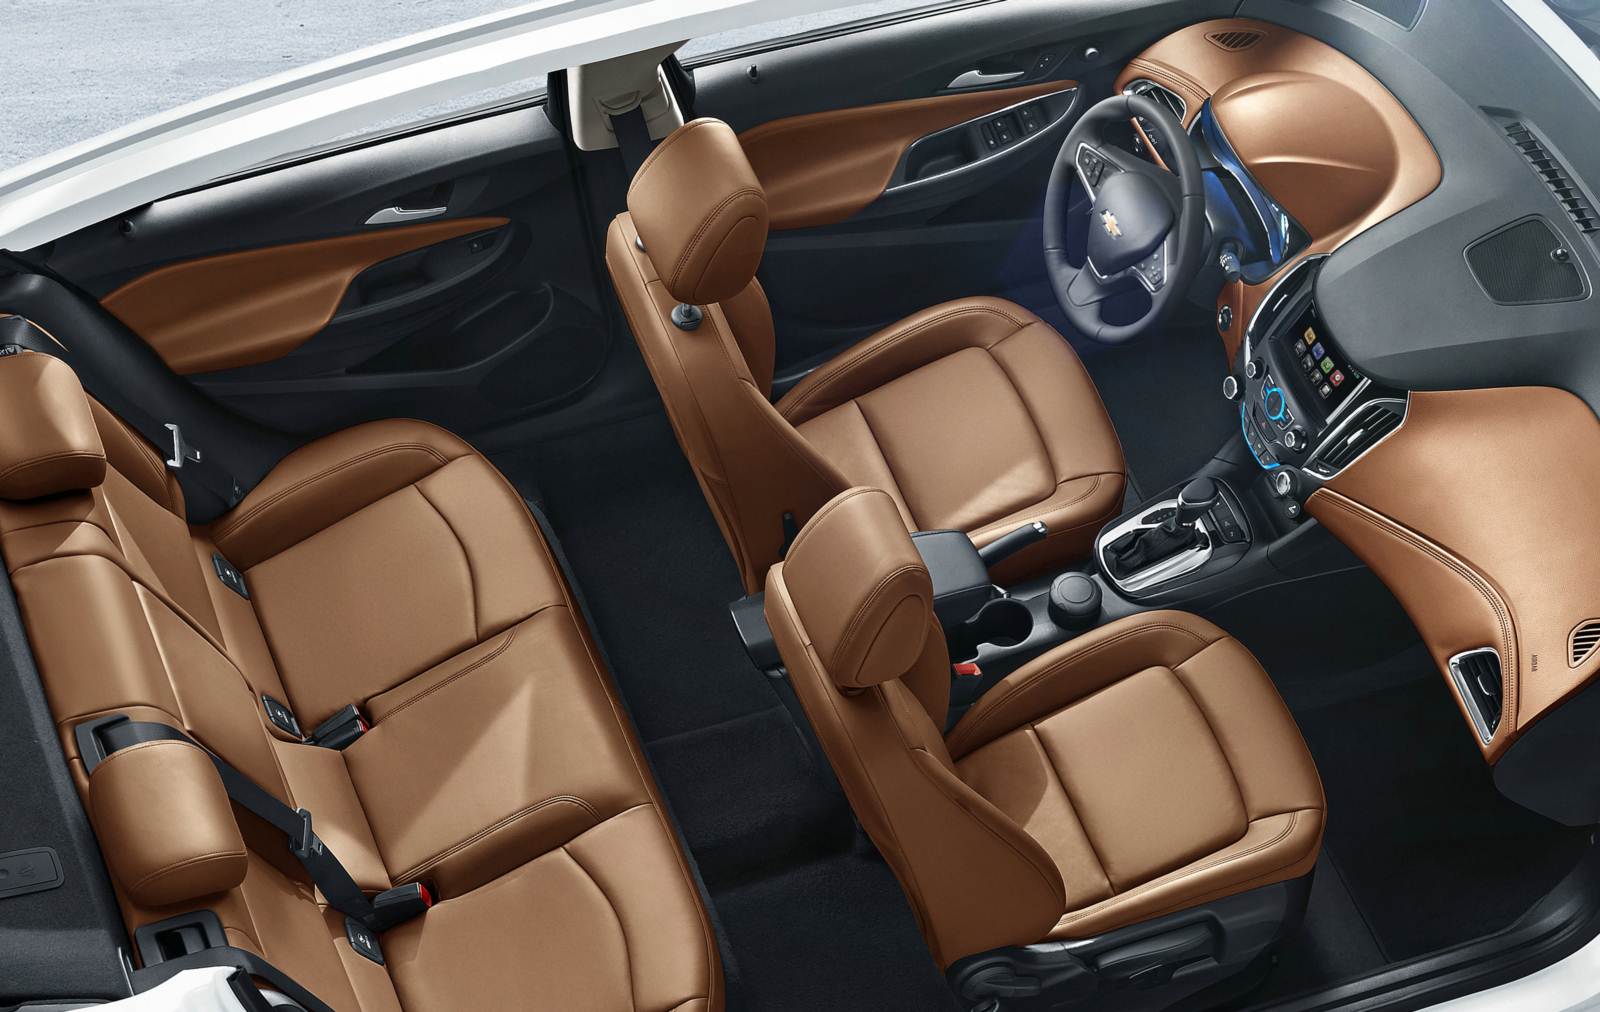 Chevrolet Cruze 2015 - interior